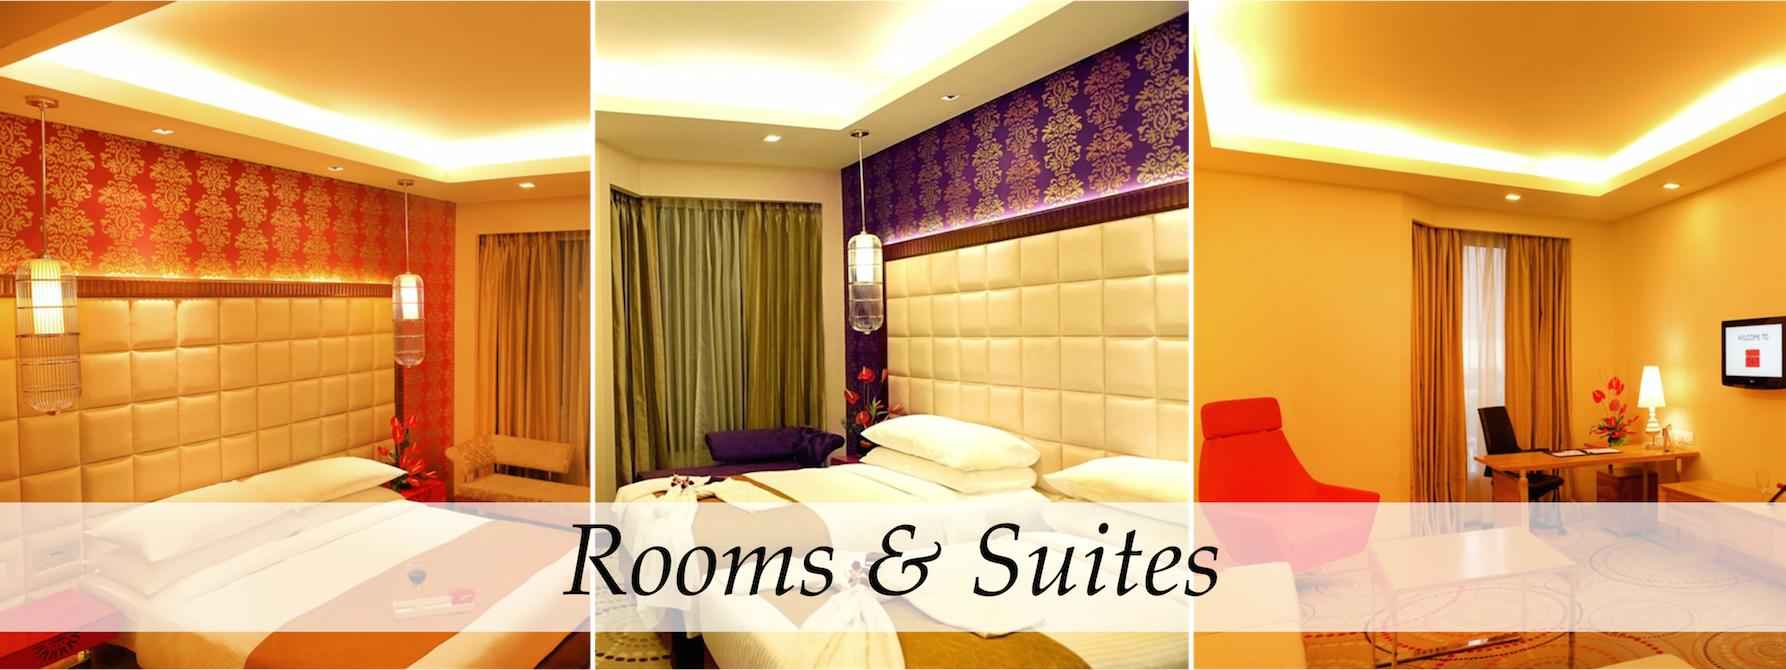 metropolitan hotel rooms and suits.jpg